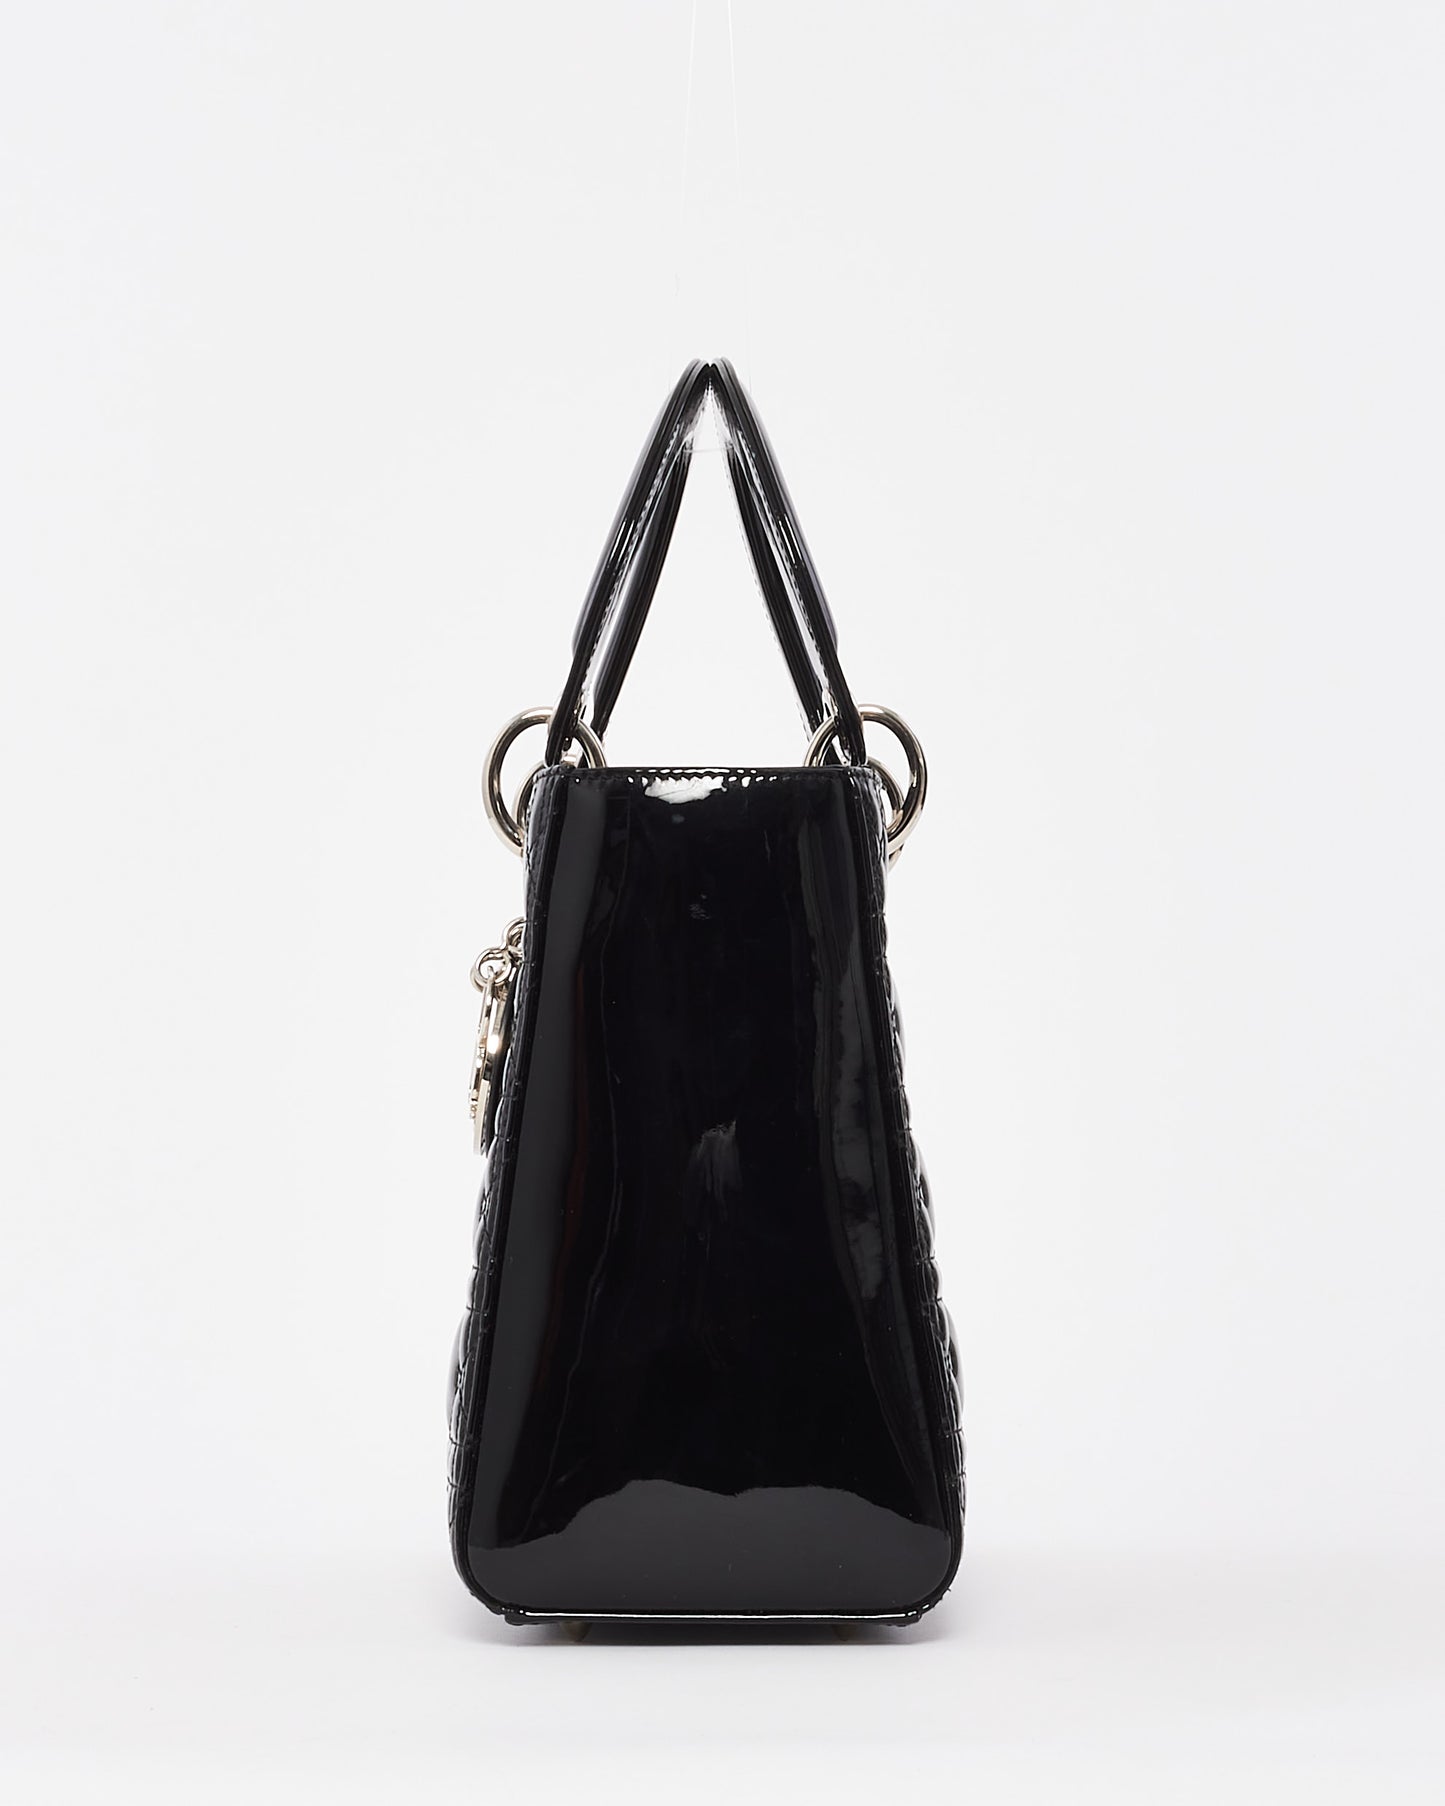 Dior Black Cannage Patent Leather Medium Lady Dior Bag